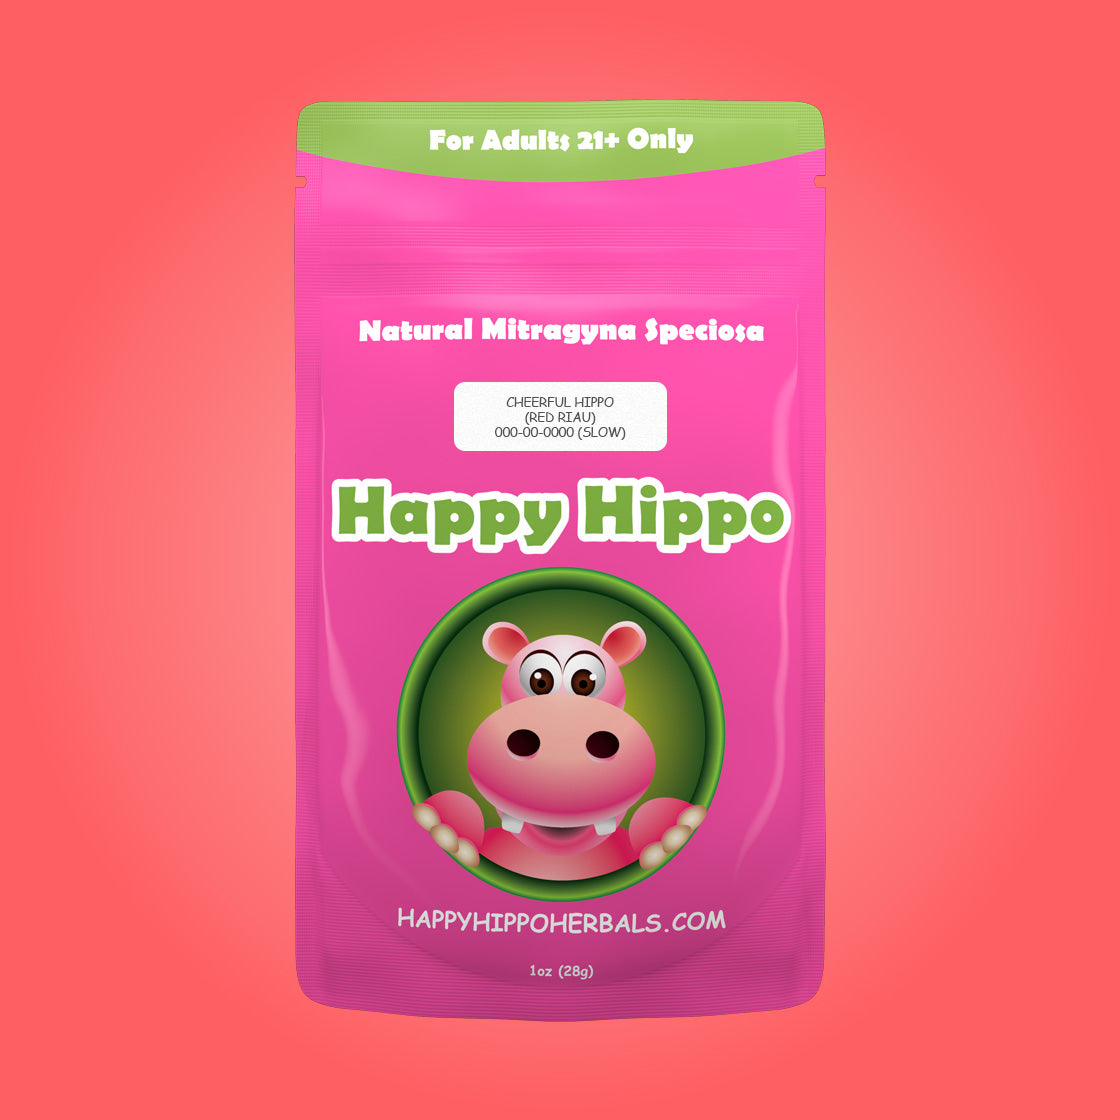 Product Image depicting a 1oz bag of Happy Hippo Red Vein Riau Kratom Powder (Mitragyna Speciosa).